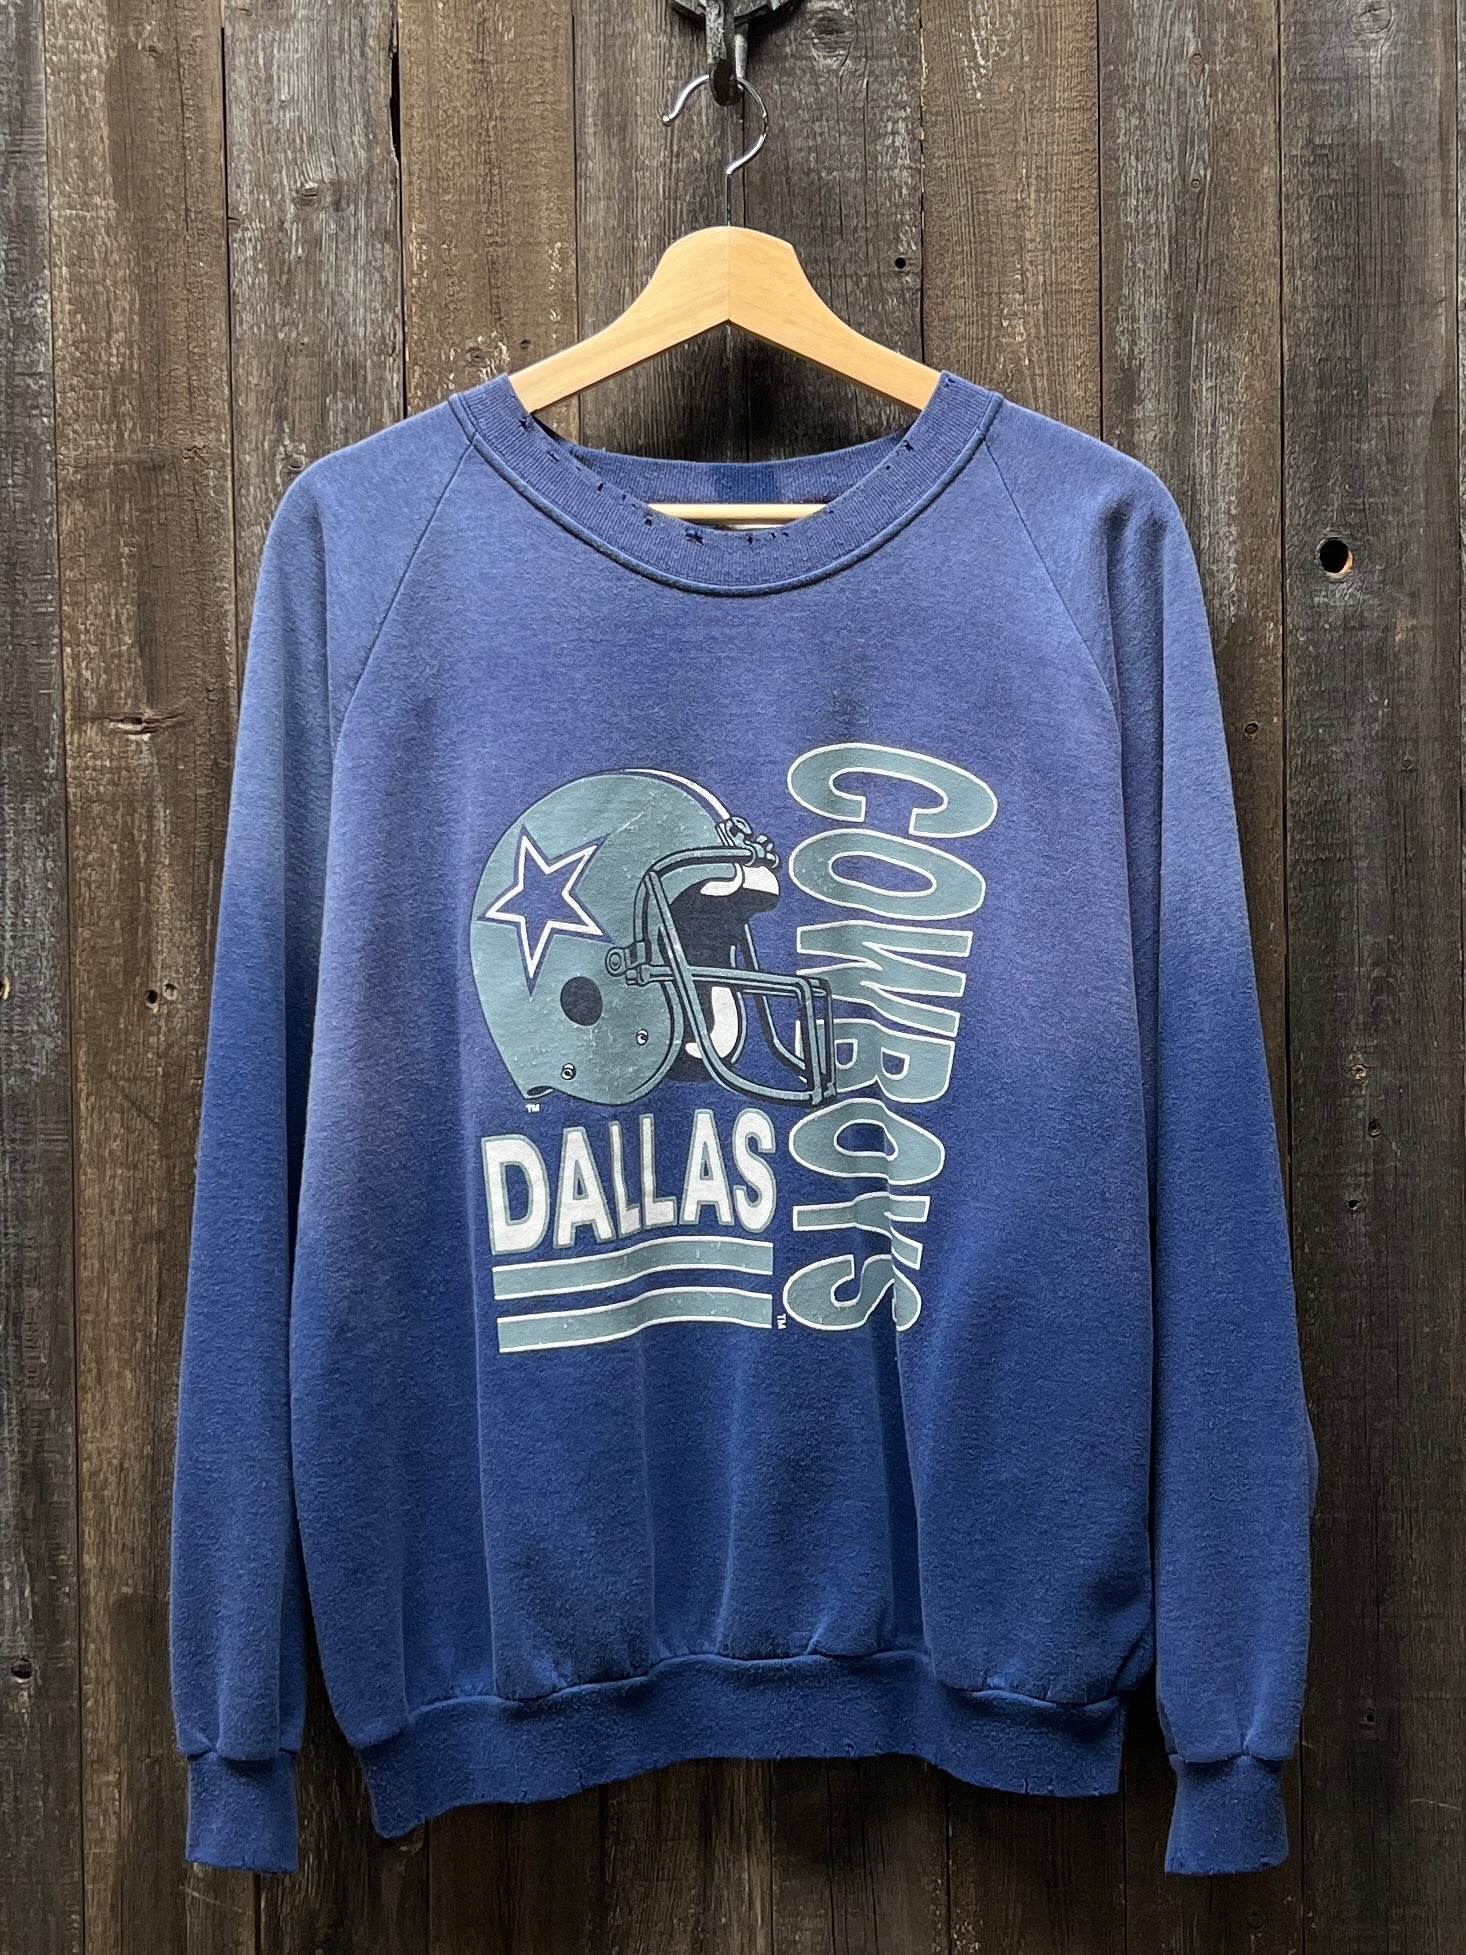 Dallas Cowboys Sweatshirt -M/L-Customize Your Embroidery Wording – I STOLE  MY BOYFRIEND'S SHIRT